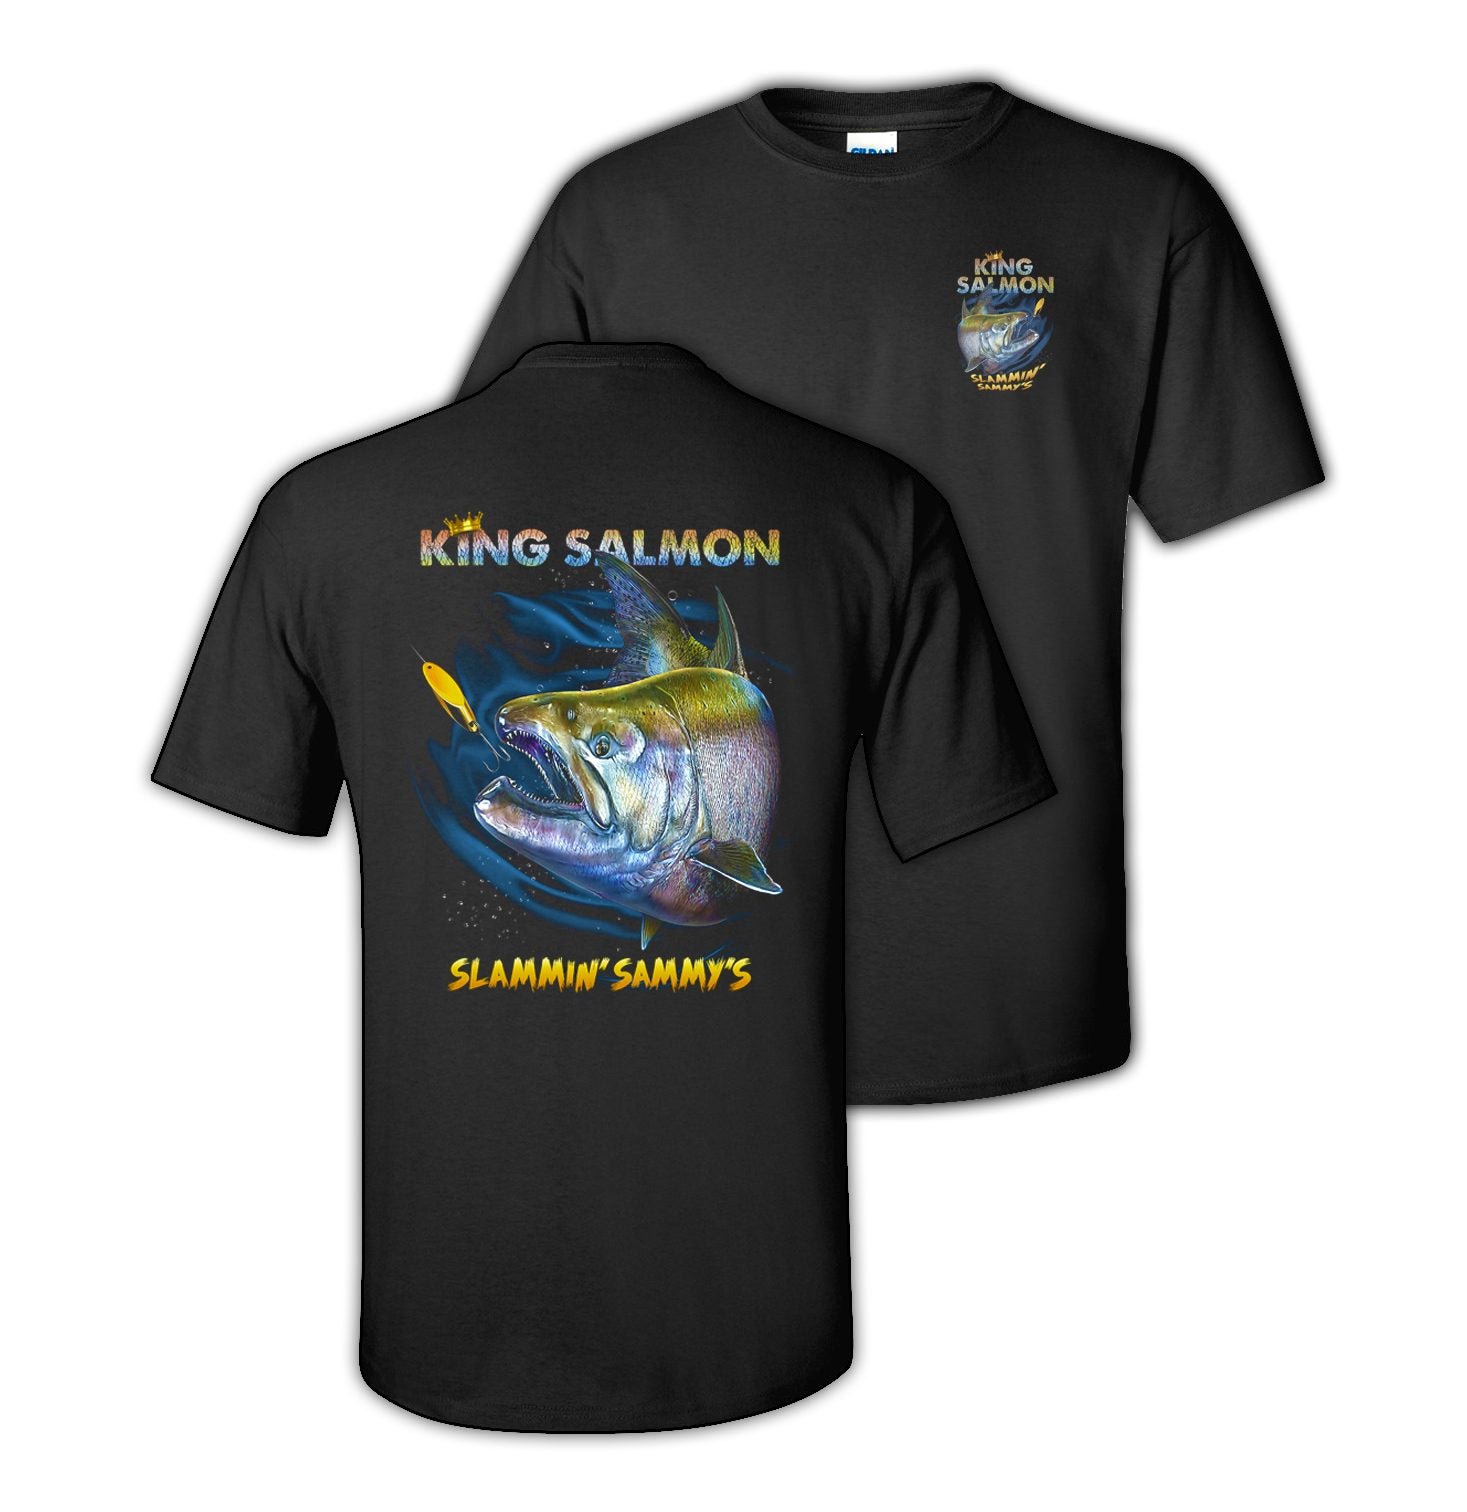 King Salmon “Slammin' Sammy's” Two- Sided Short Sleeve T-Shirt